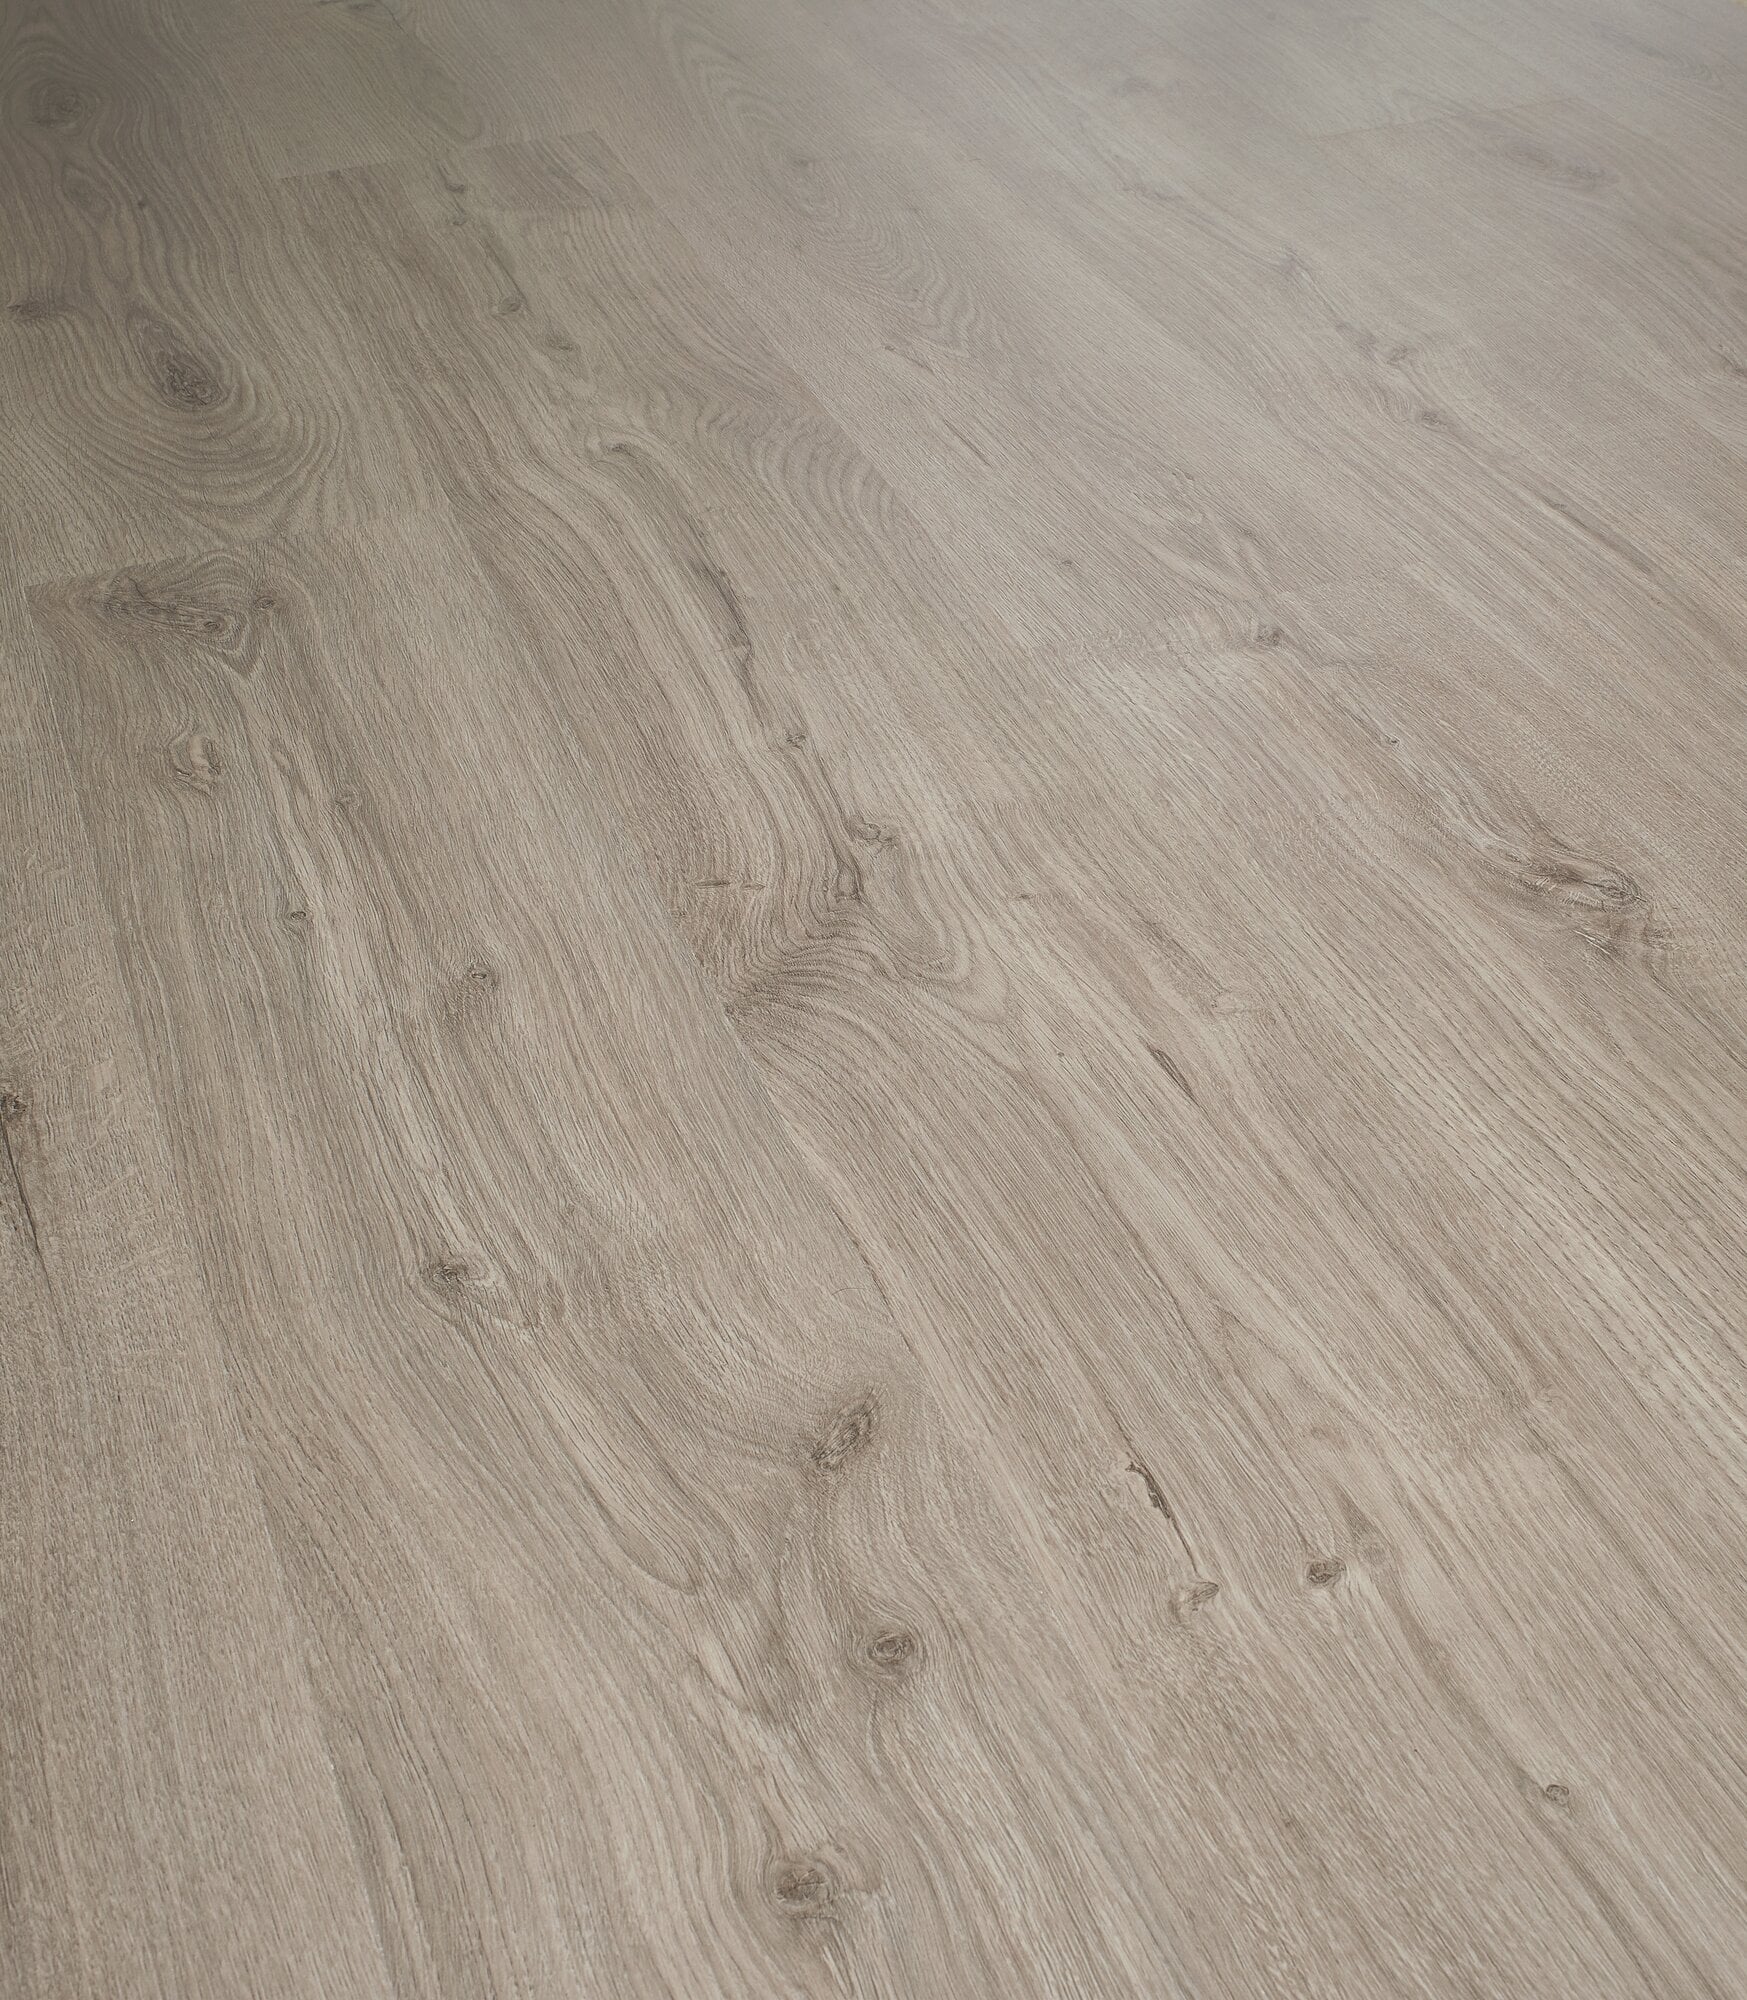 Wooden Laminate Flooring From, Swiss Kronos Laminate Flooring Review